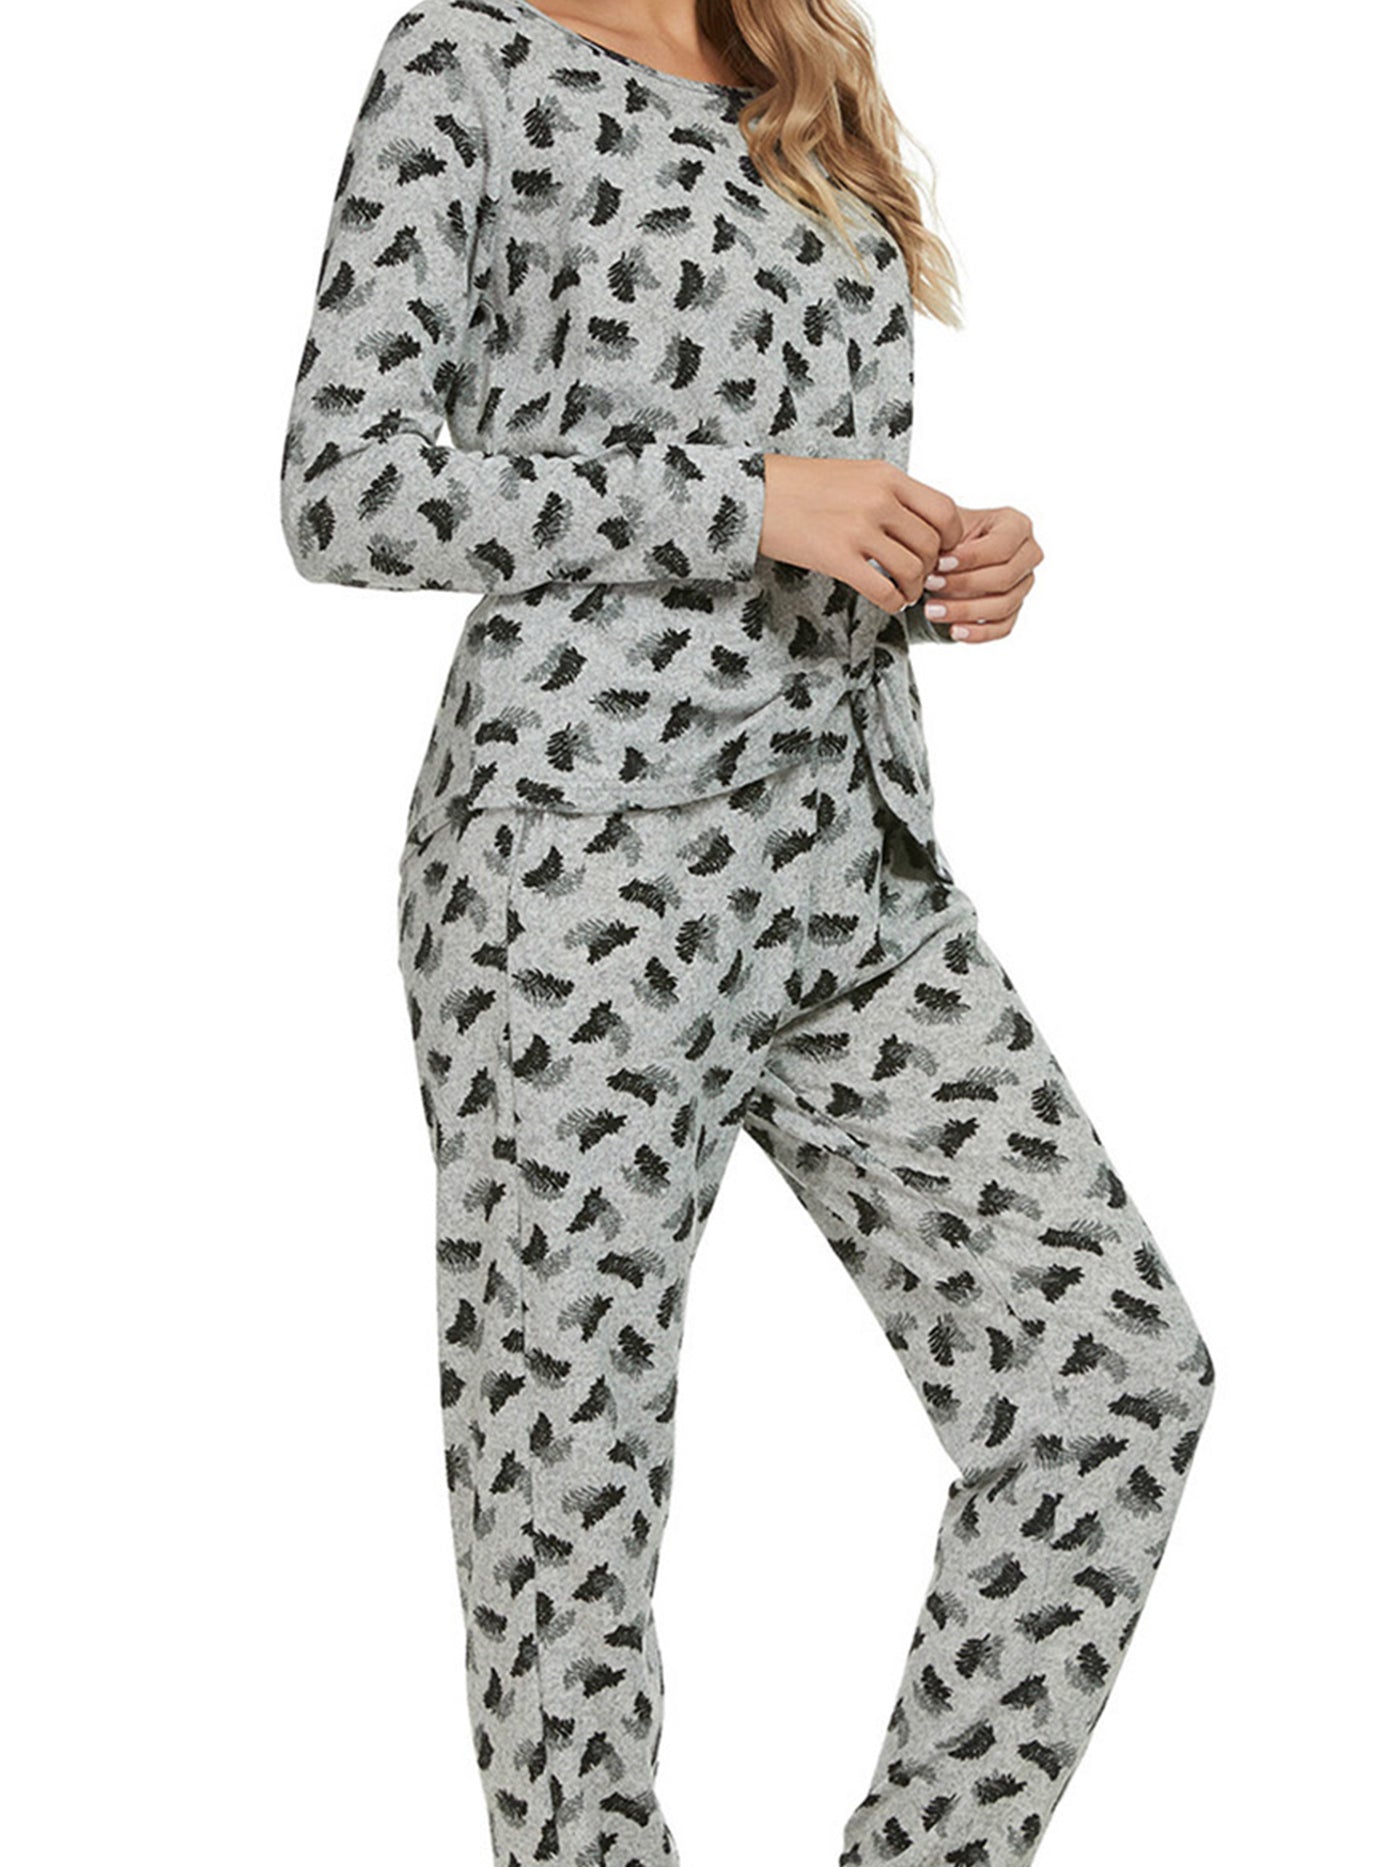 Bublédon Women's Sleepwear Lounge Nightwear with Pockets Pajama Set